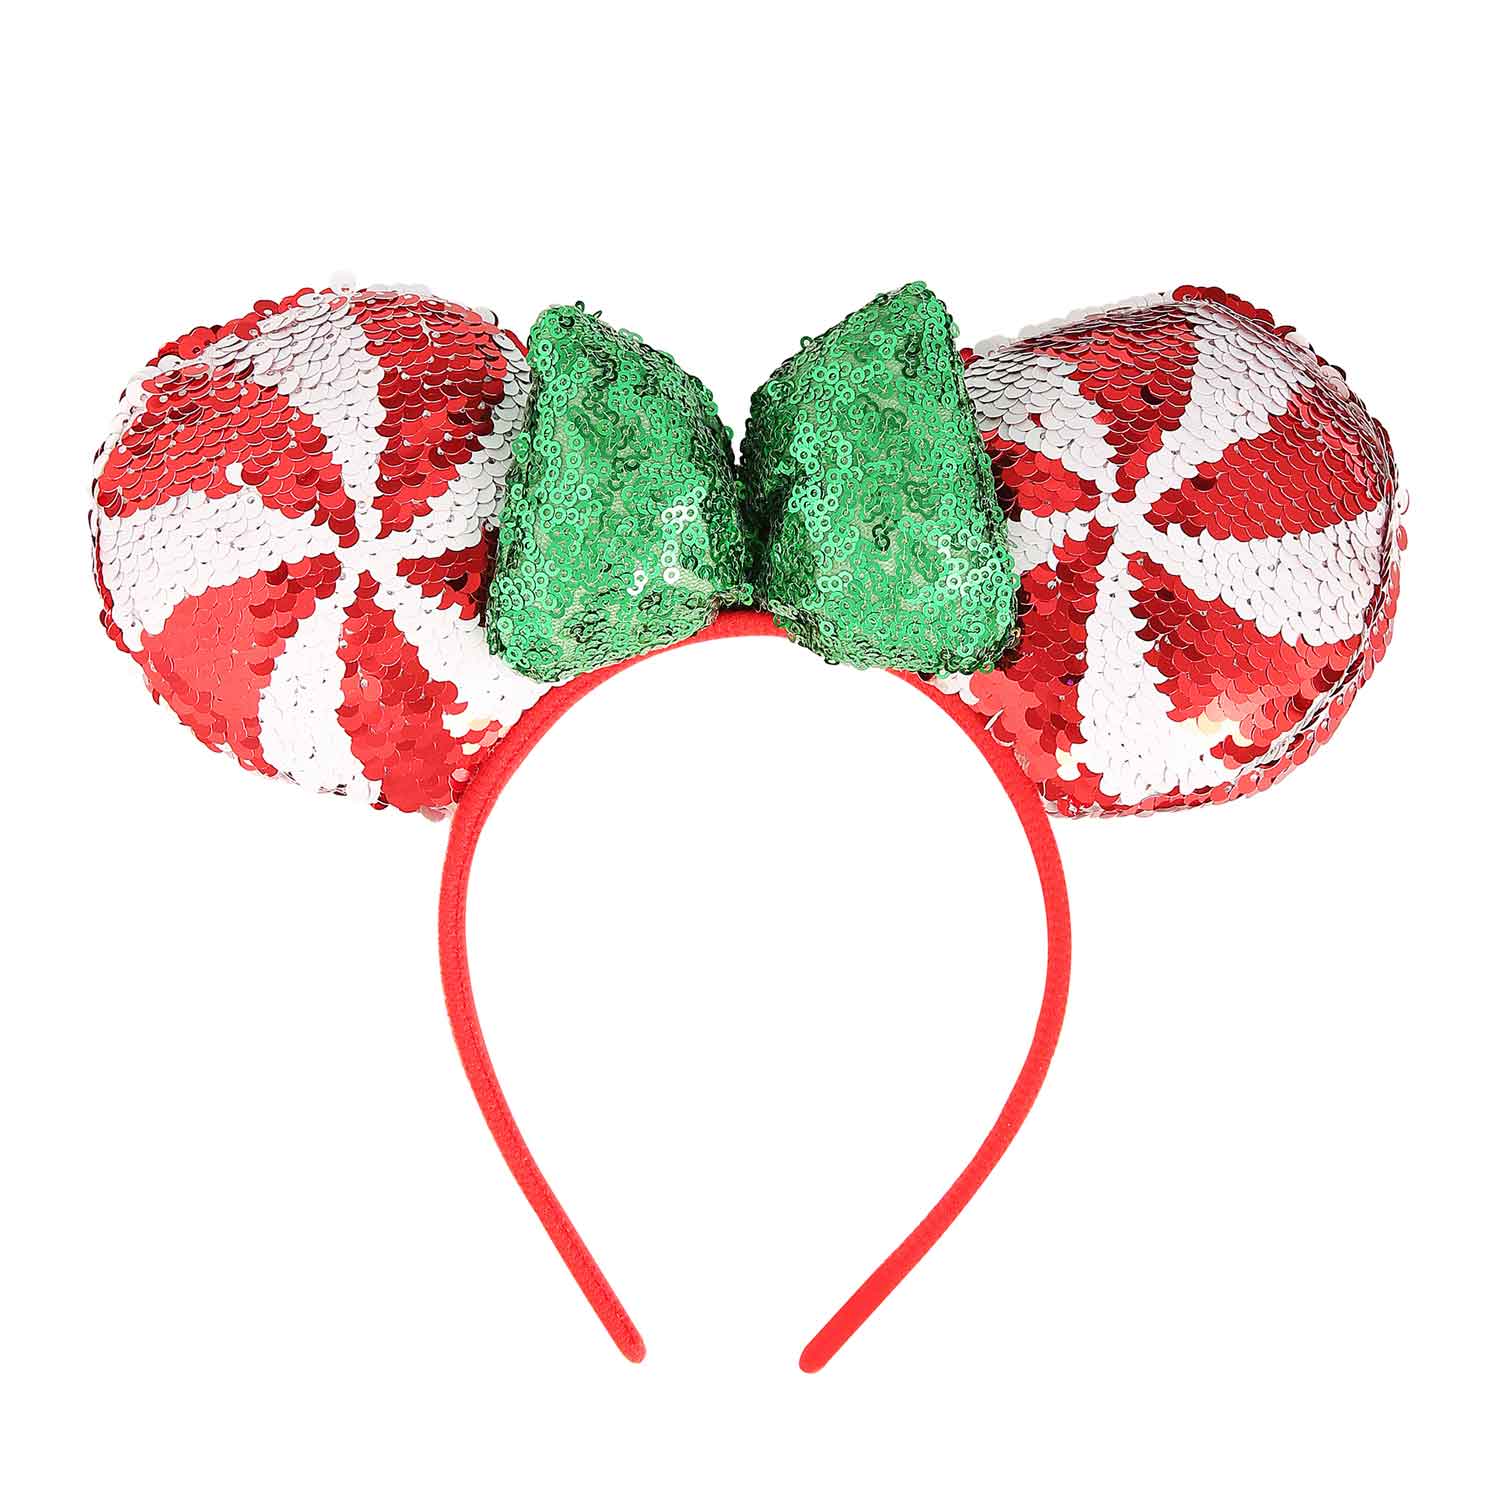 Disney Minnie Mouse Peppermint Swirl Ears Headband